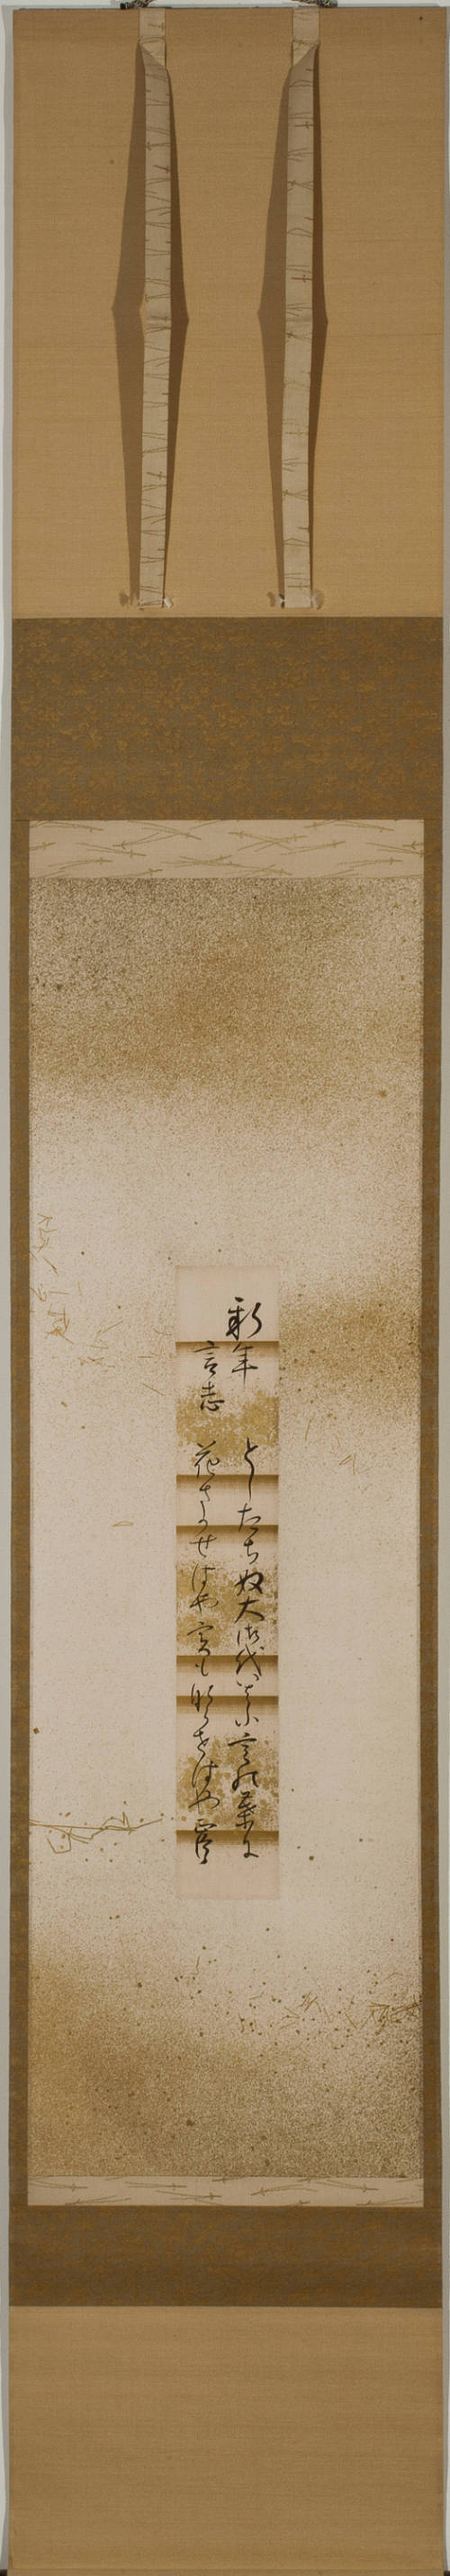 Mounted Tanzaku inscribed with Waka poem